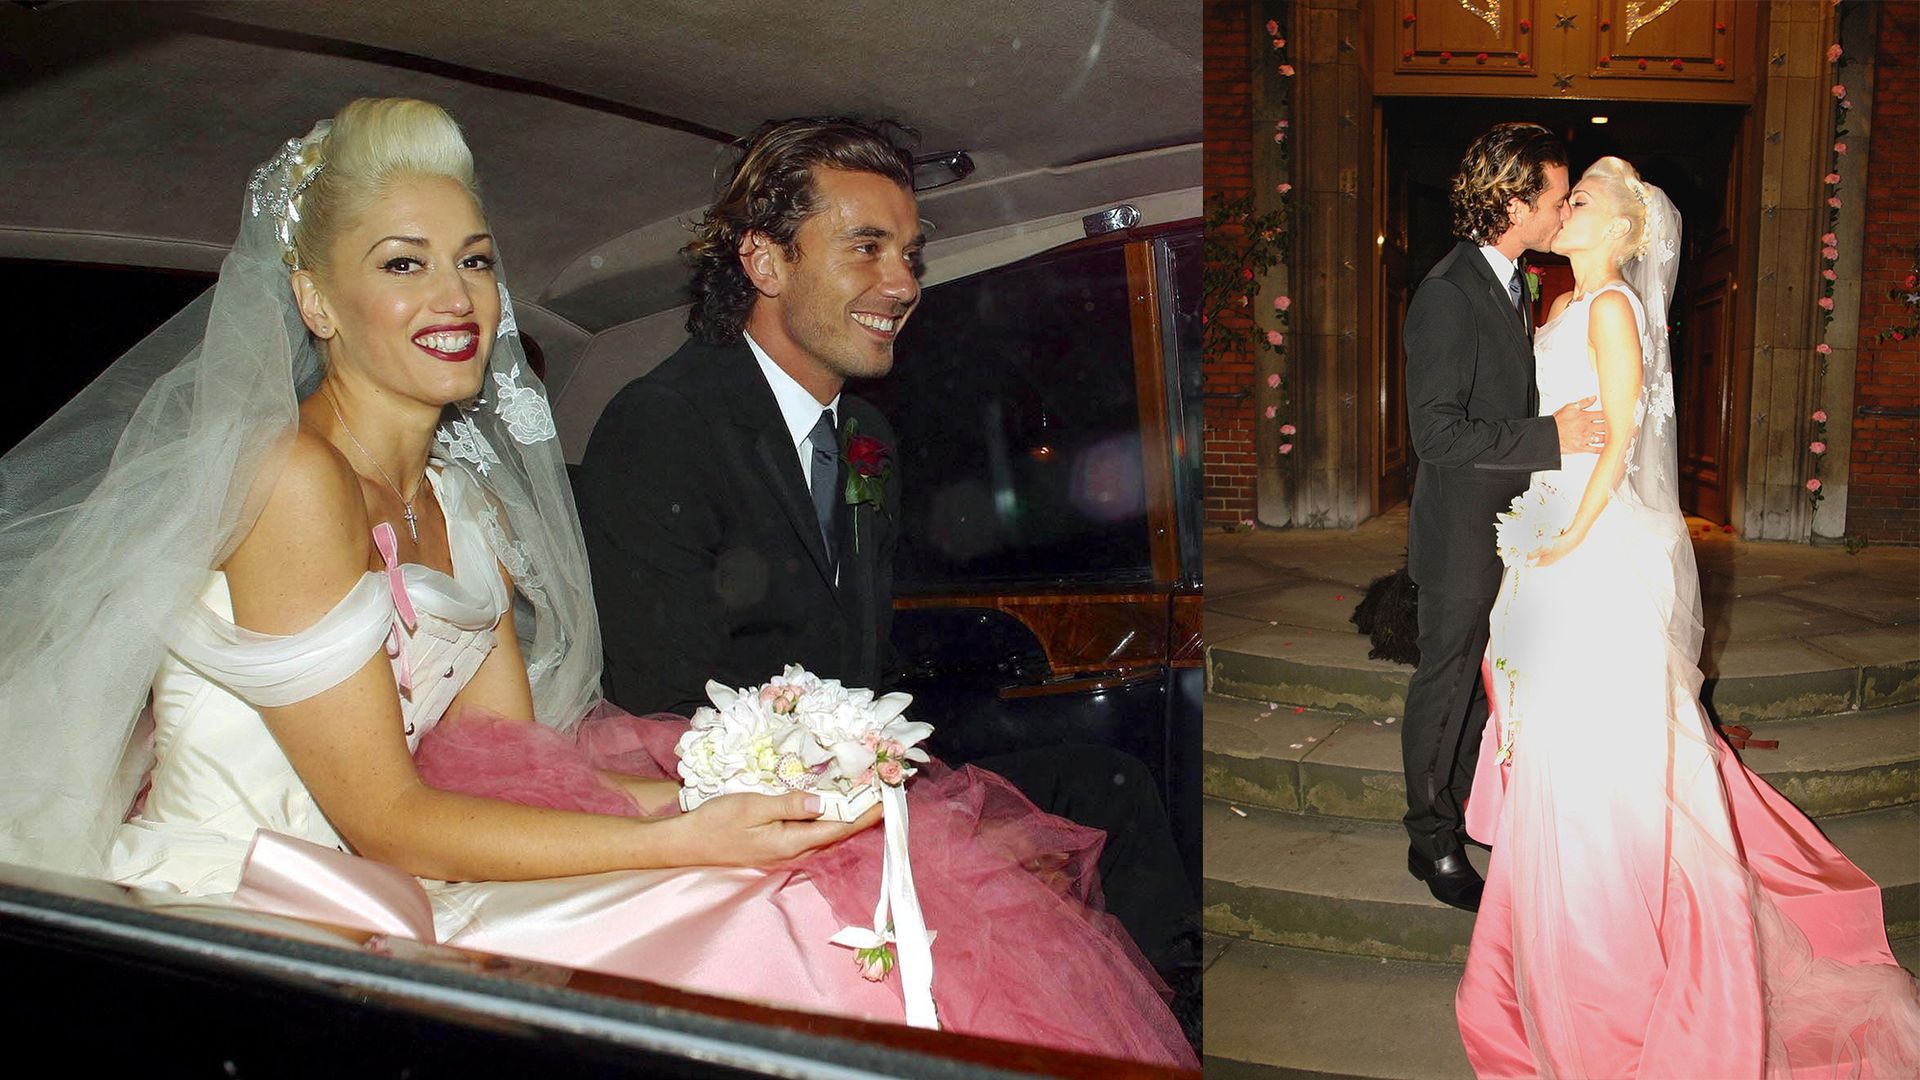 The wedding of Gwen Stefani and Gavin Rossdale